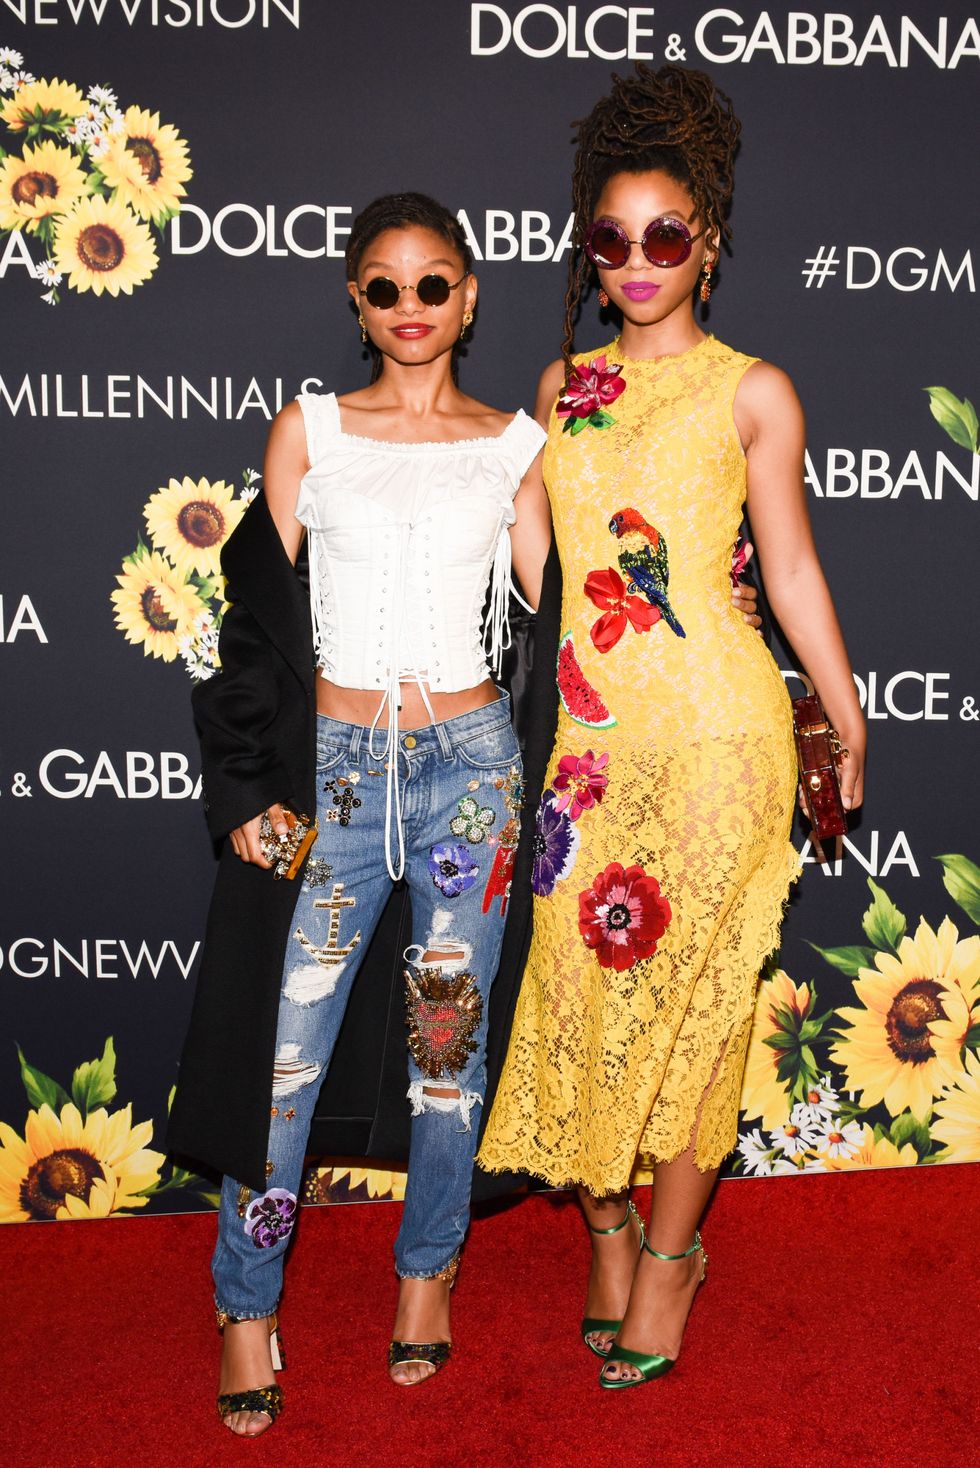 Dolce&Gabbana e la festa millennials